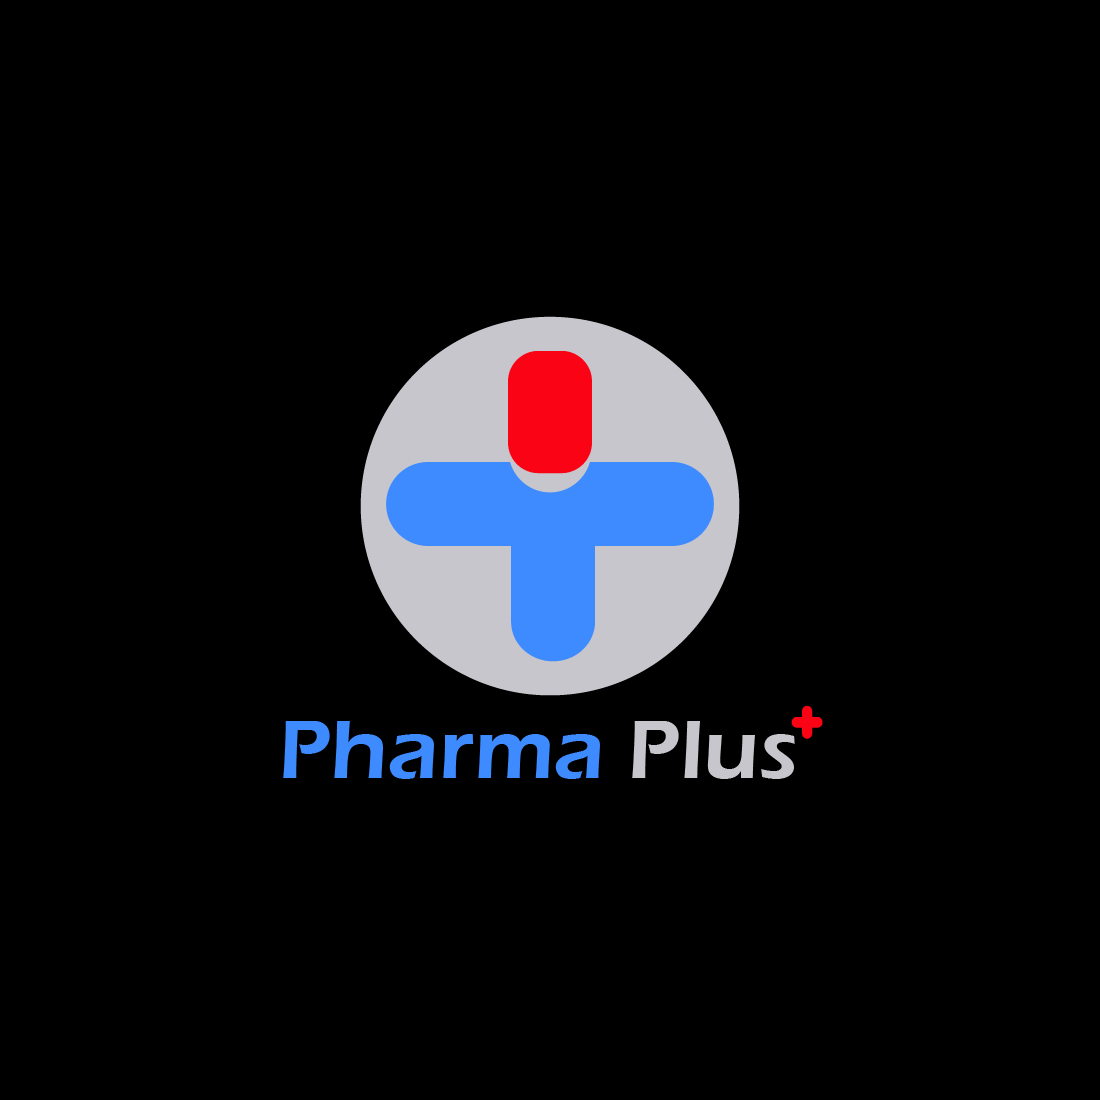 Pharma Plus Logo Bundle with black background.